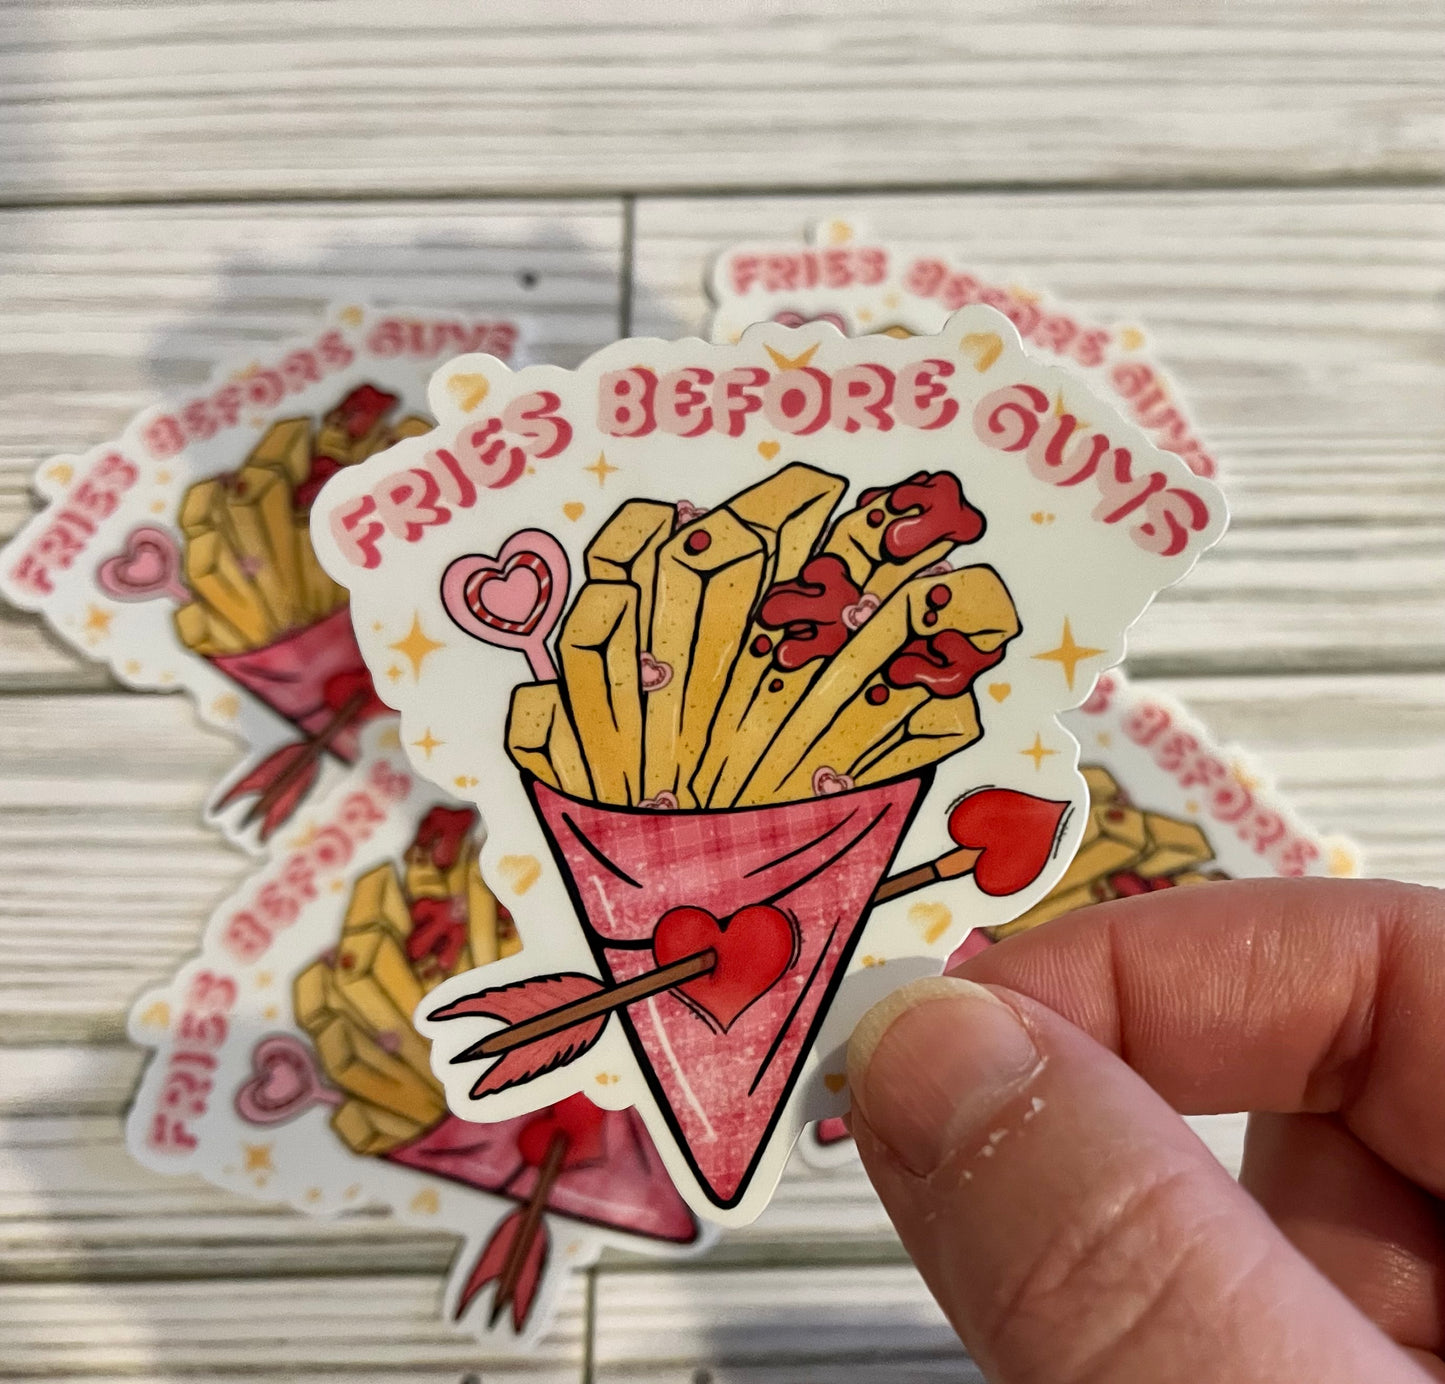 Fries before Guys, Vinyl Sticker